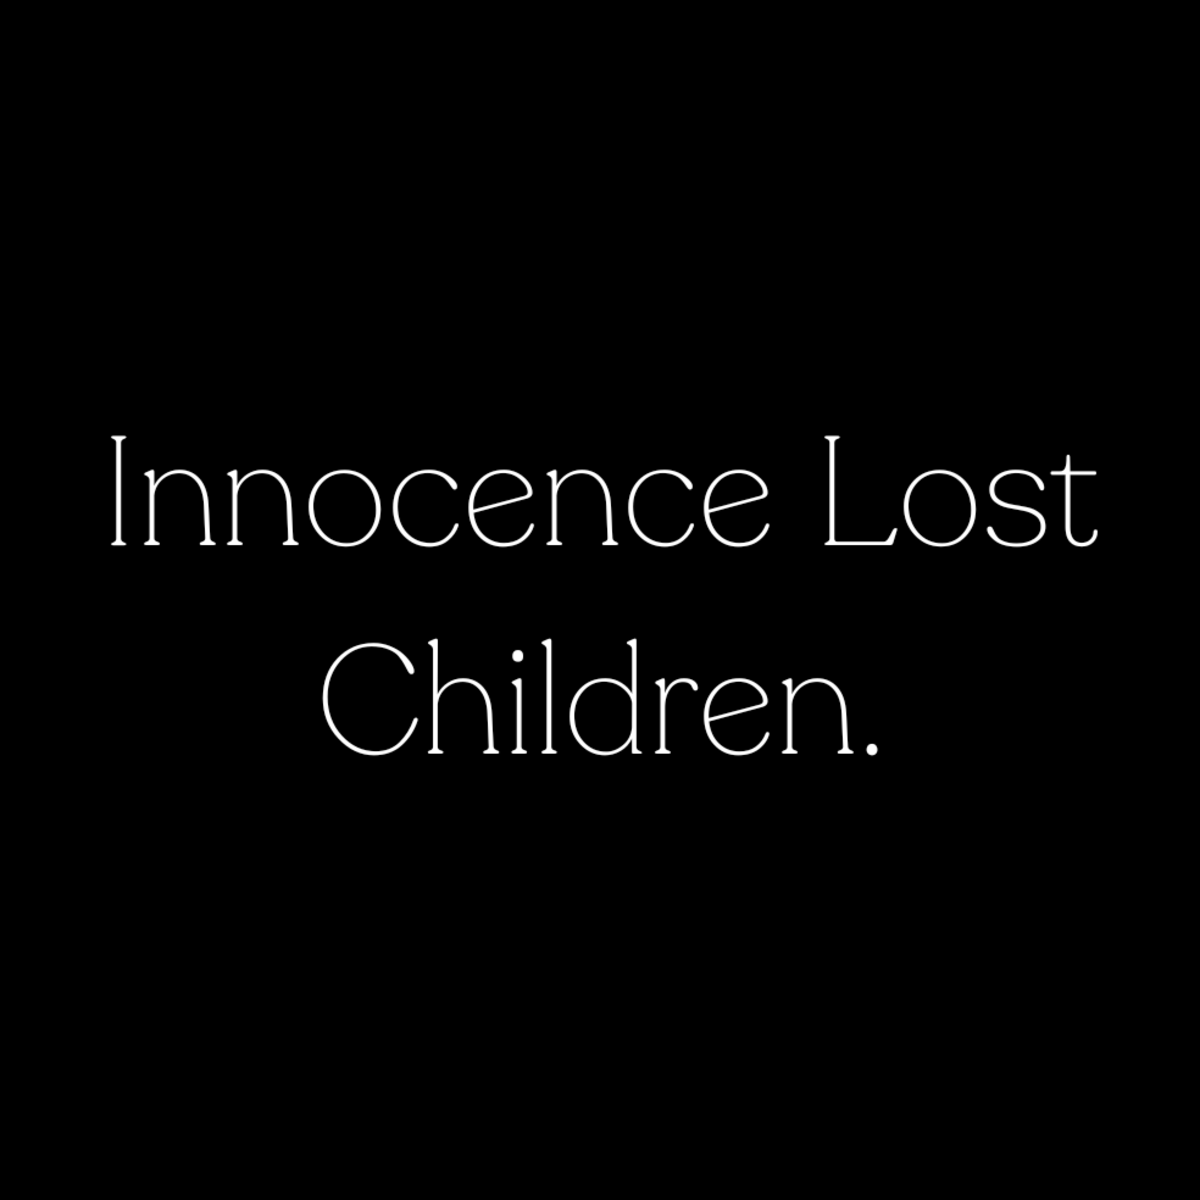 Innocence Lost Children.